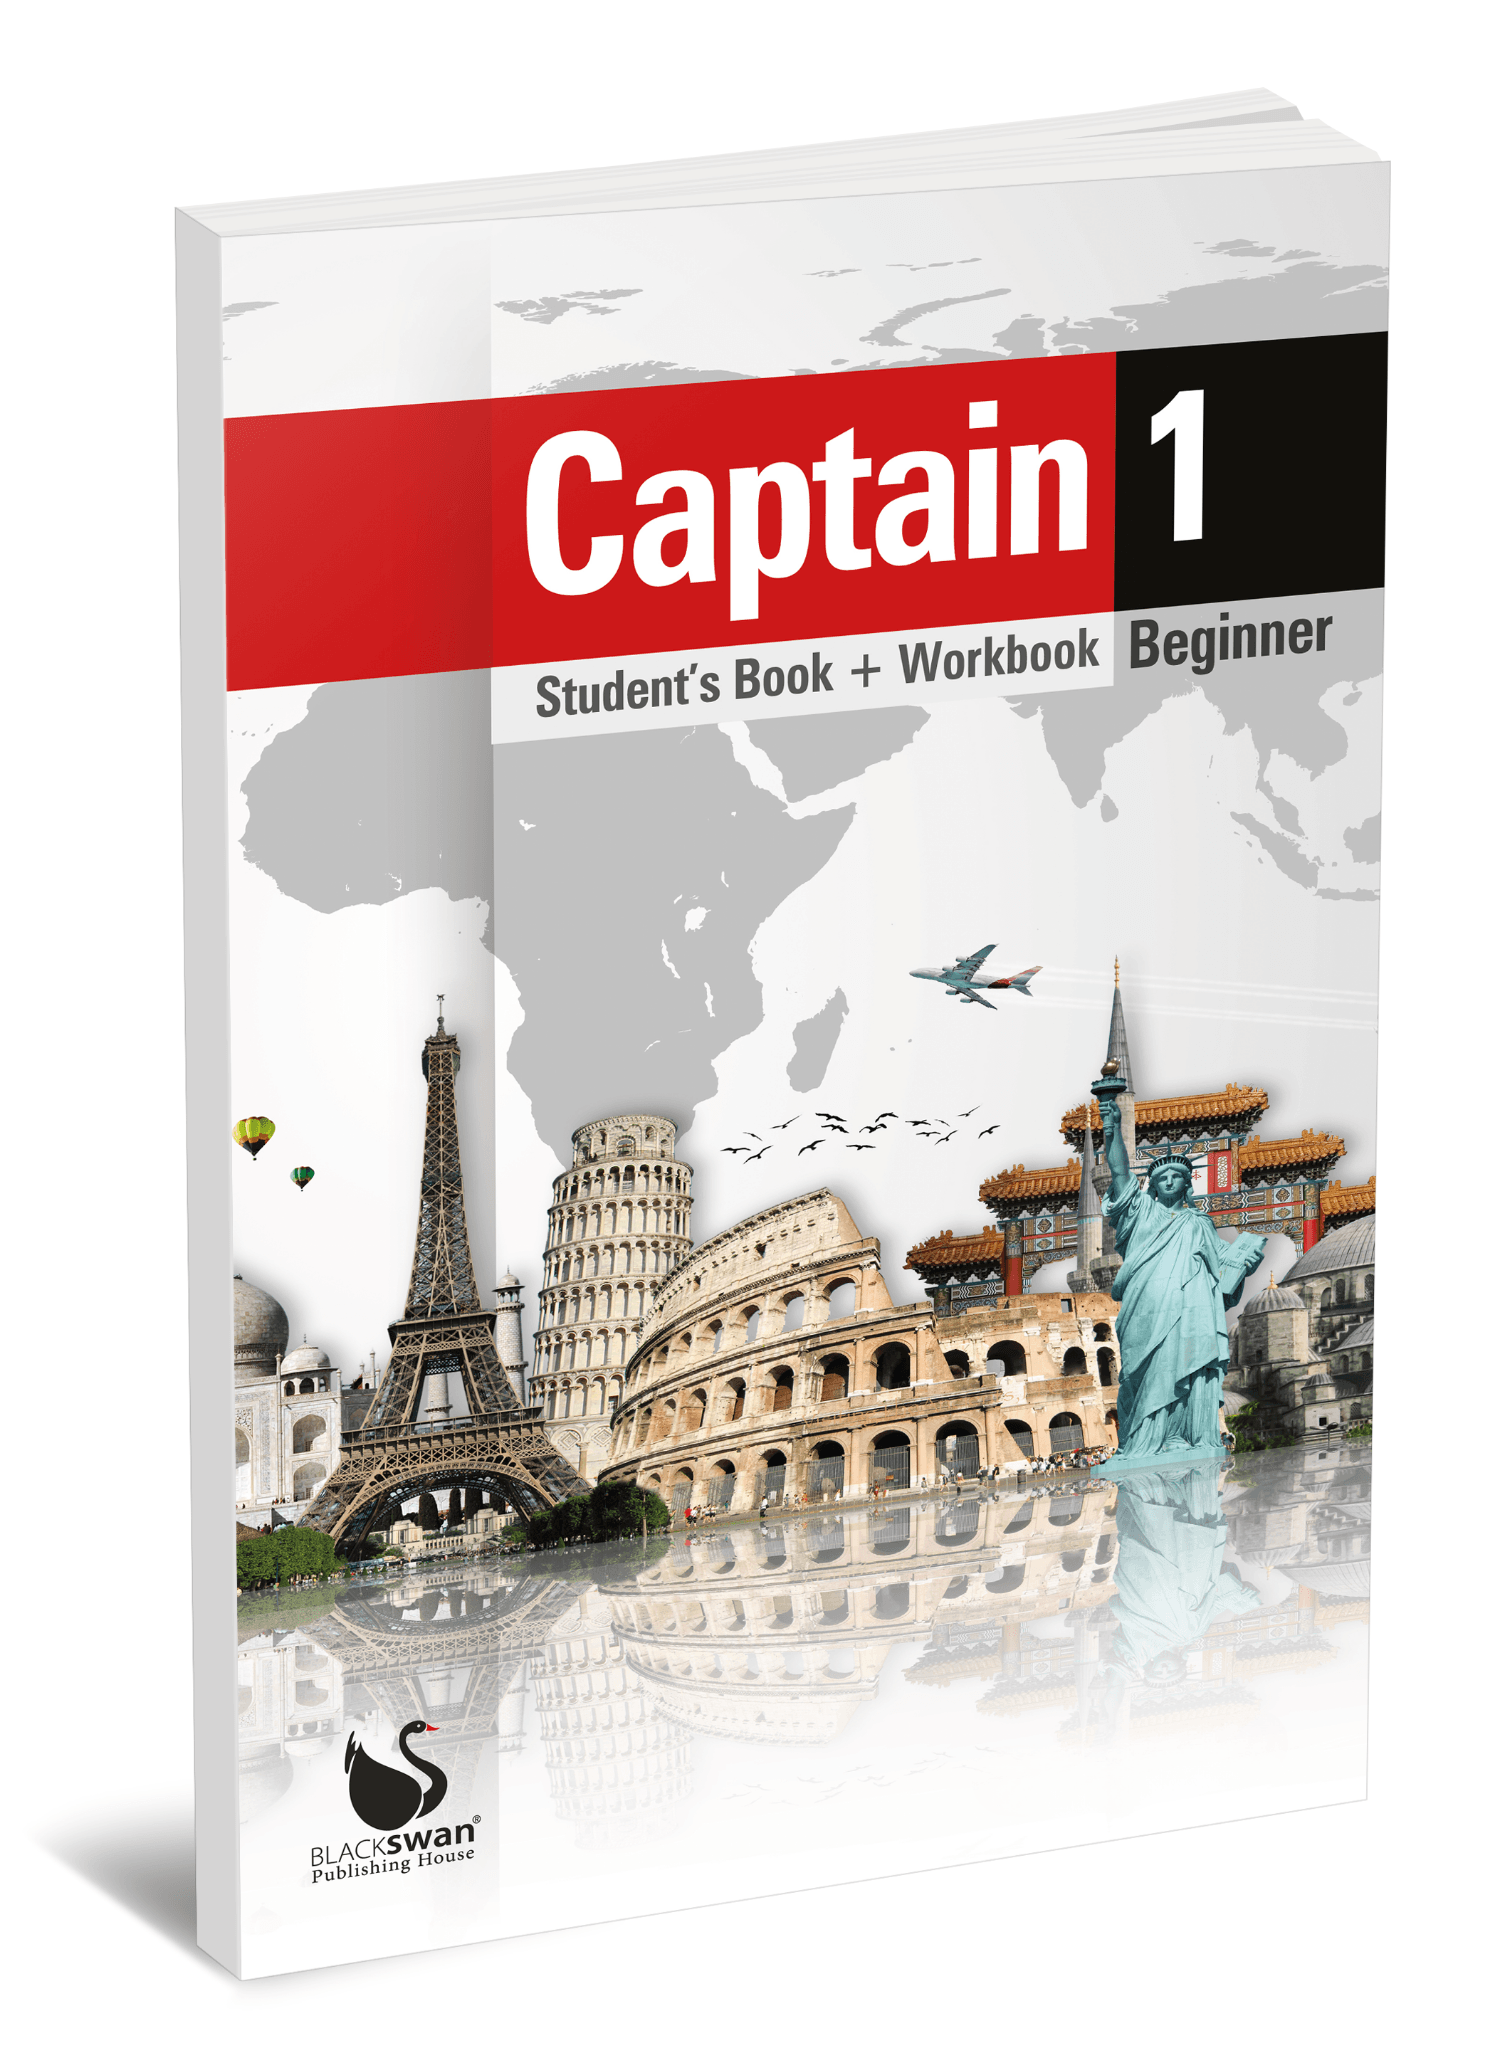 Captain 1 Student’s Book + Workbook